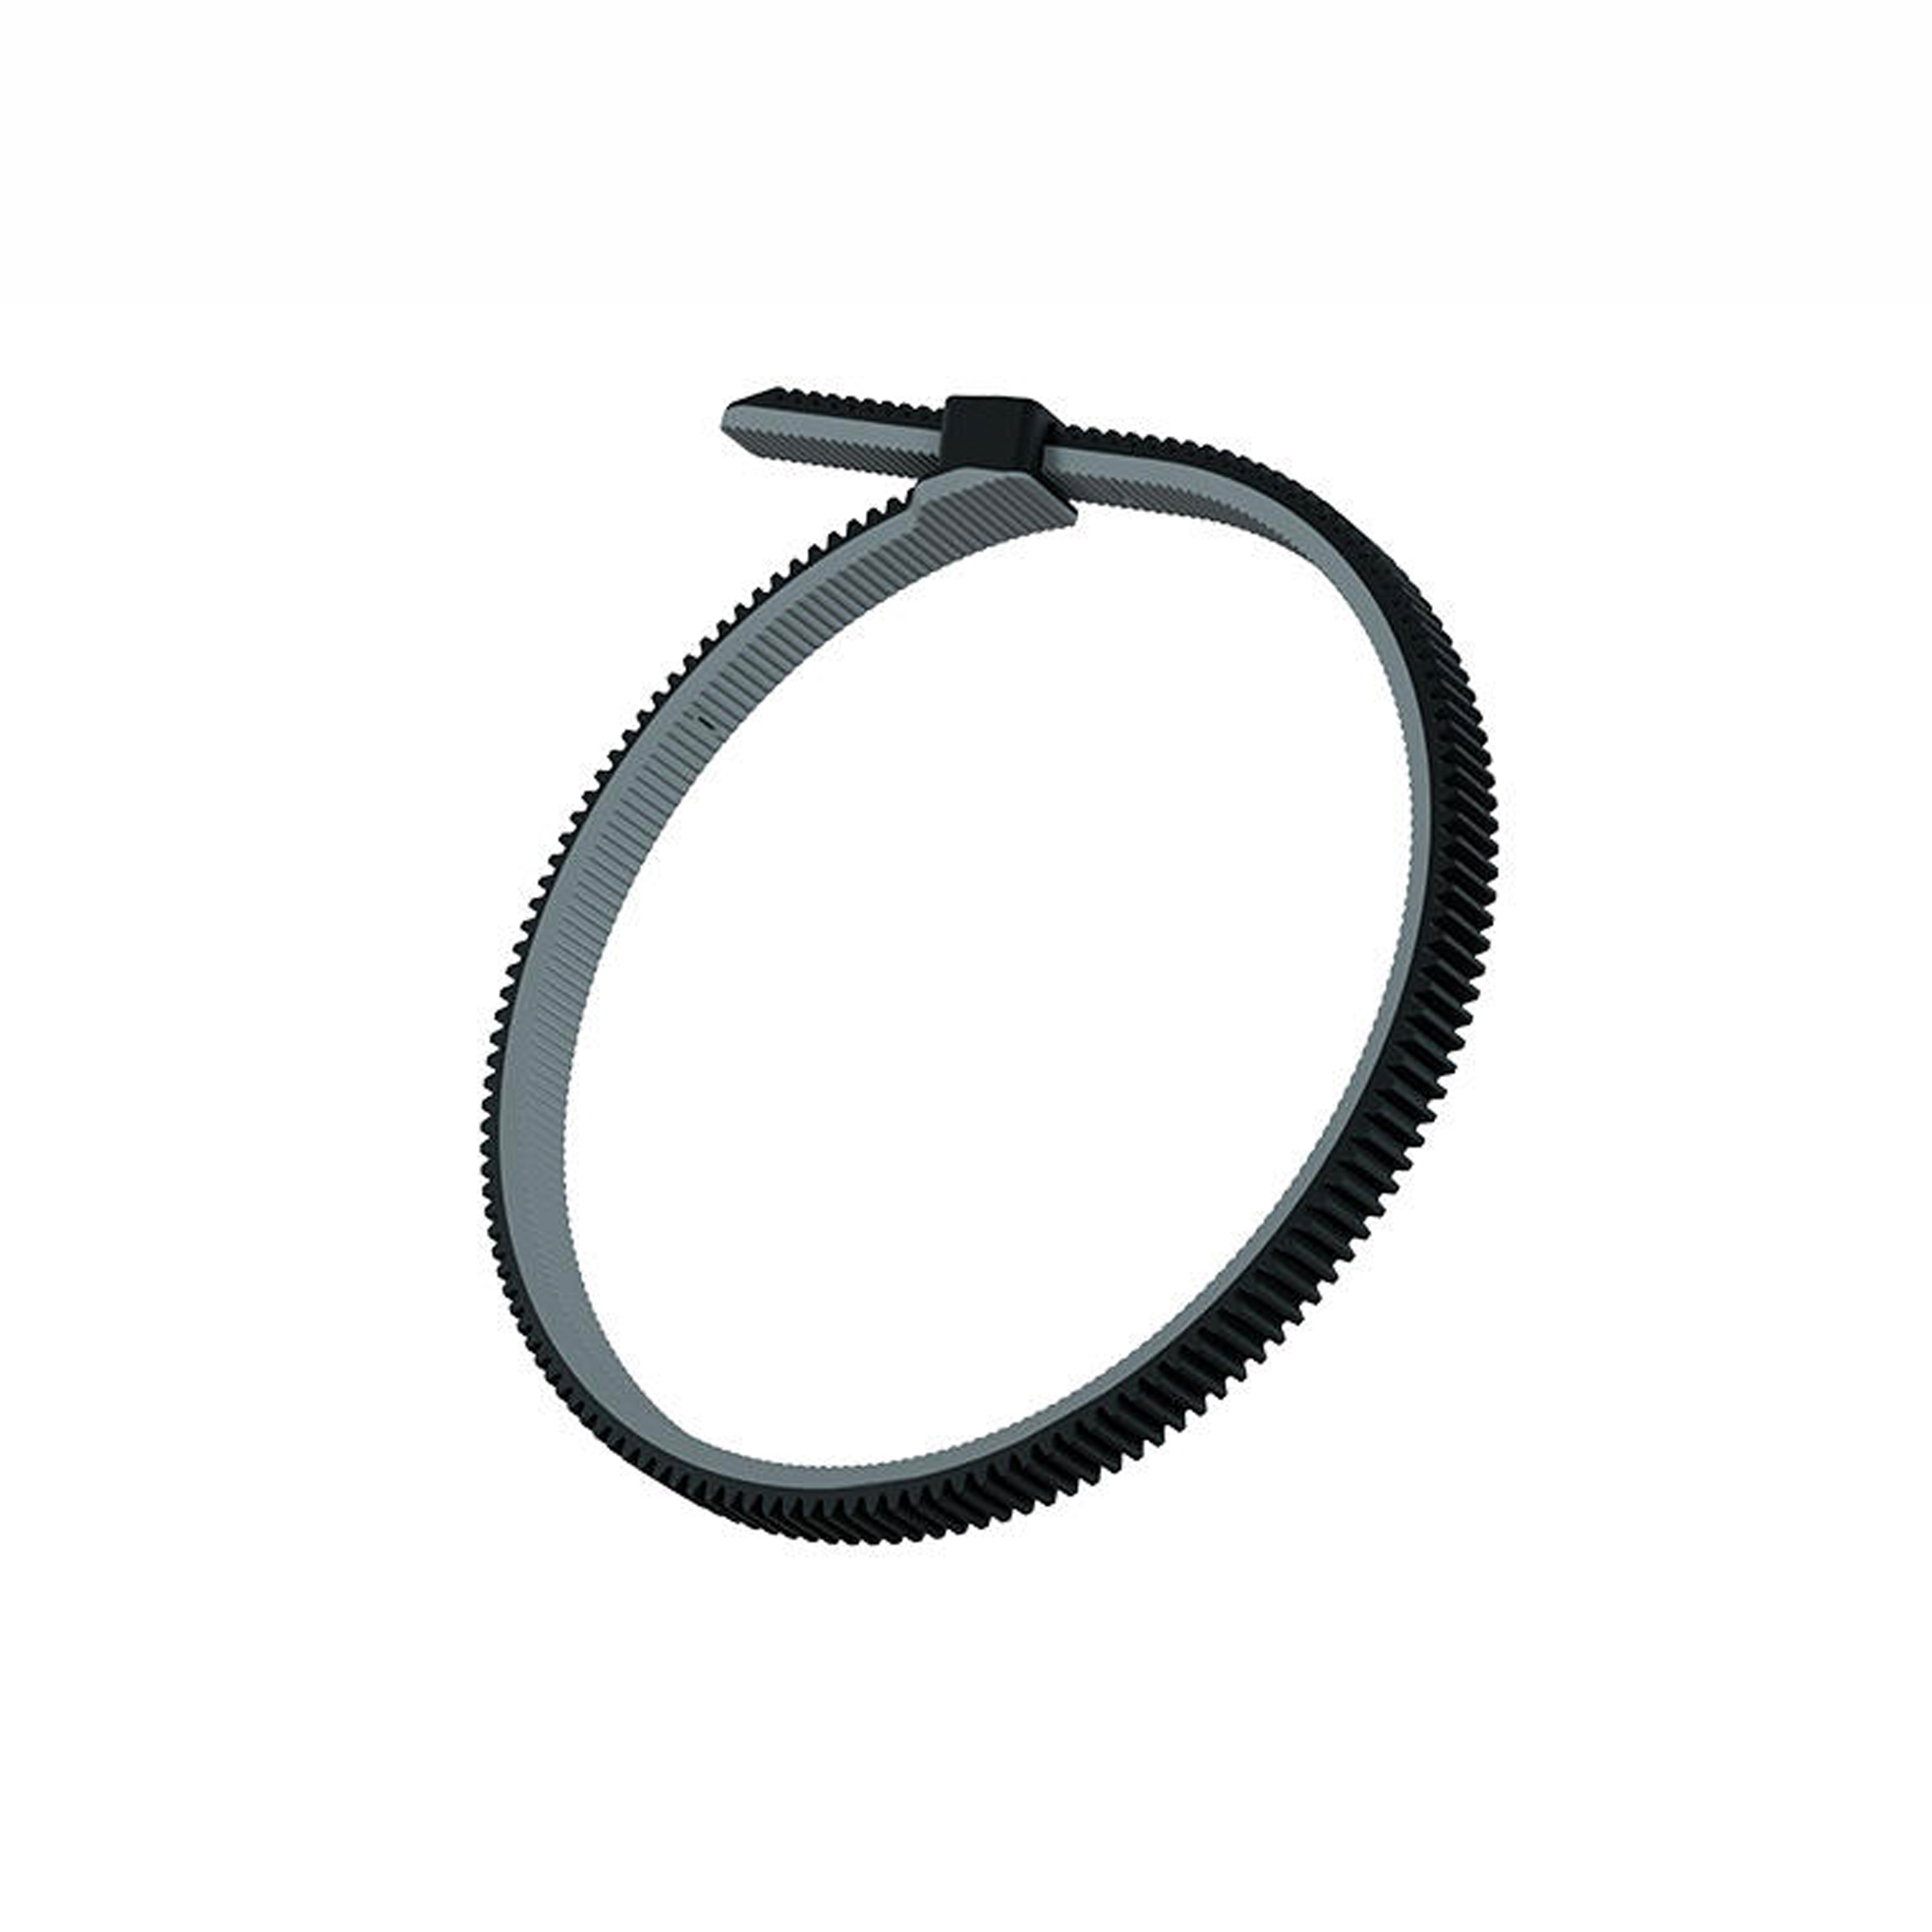 Tilta Universal Focus Gear Ring (Black)